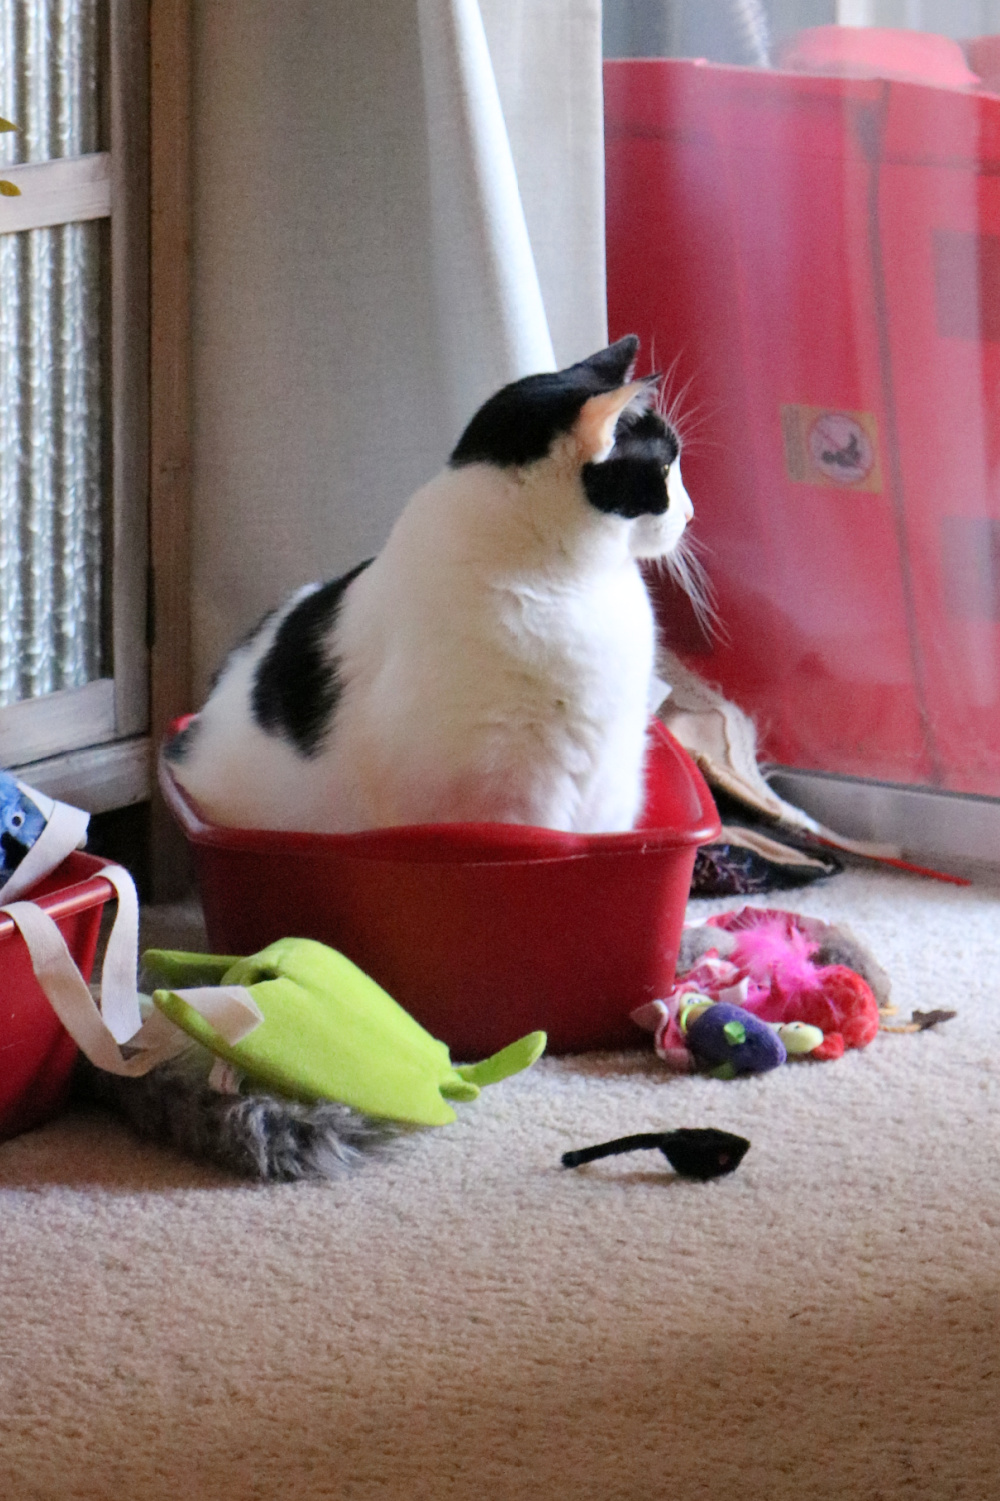 Ivy sitting in her empty toy tub